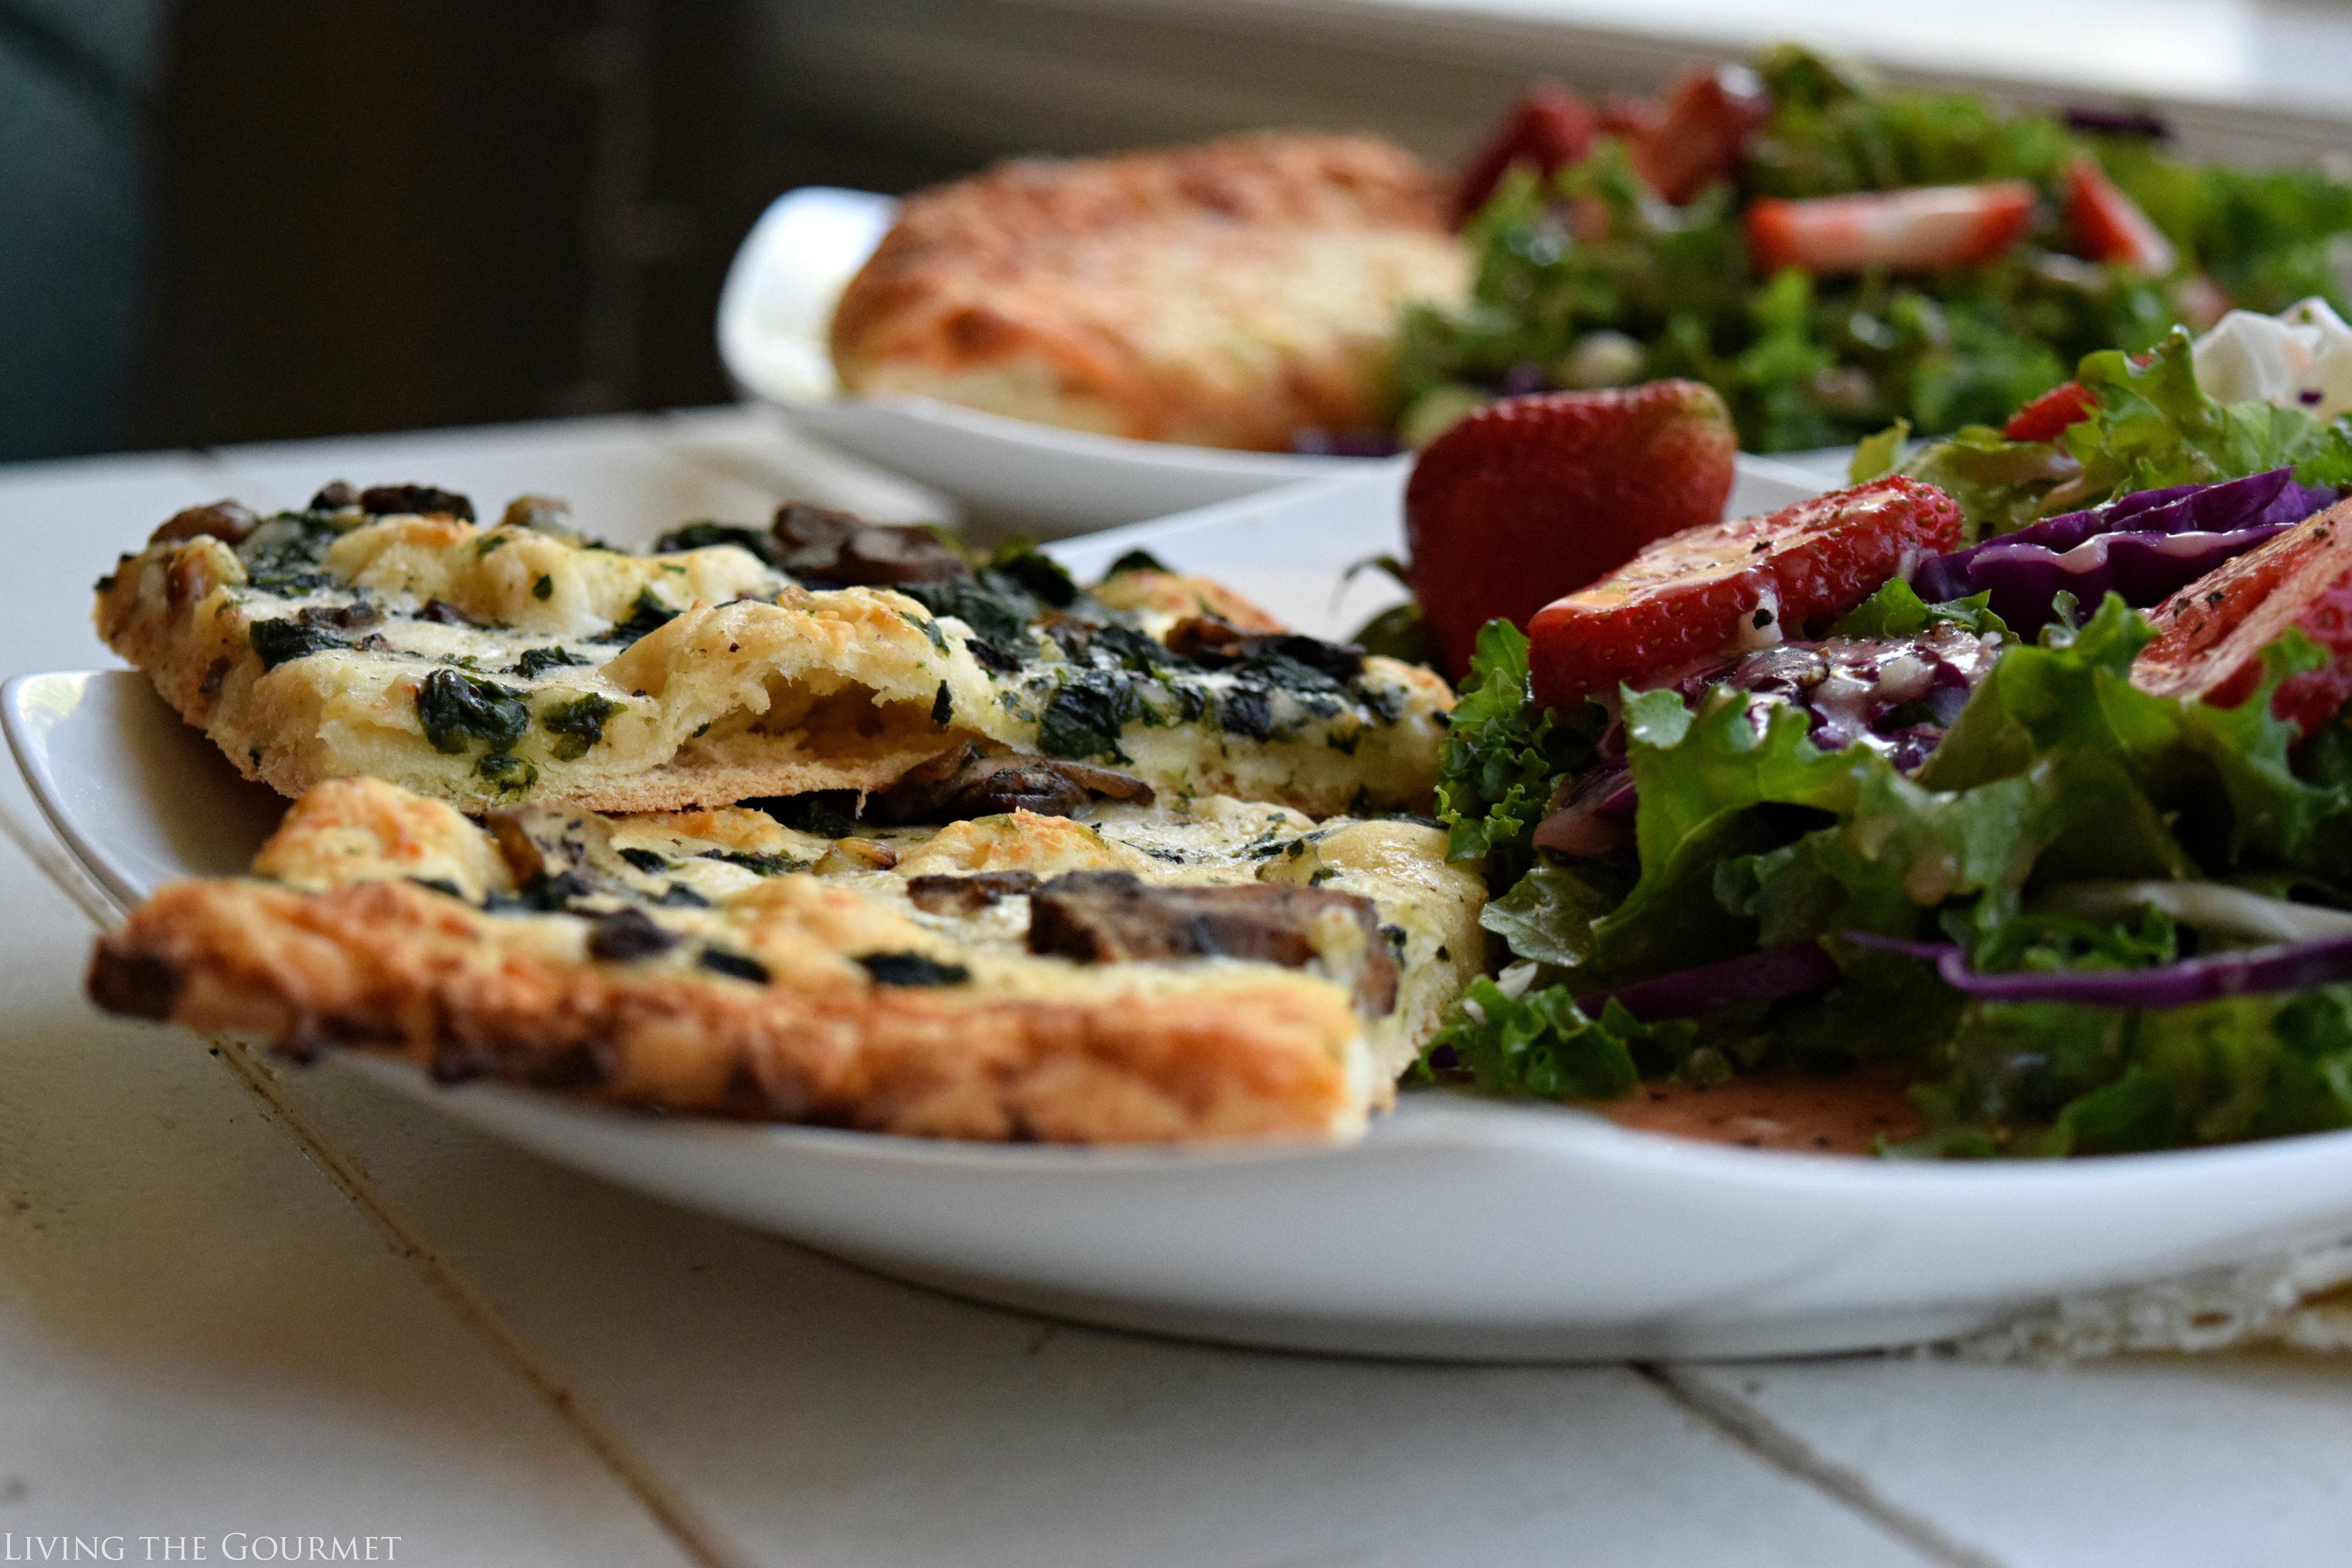 Living the Gourmet: Kale Salad with Strawberry Vinaigrette featuring Freschetta Pizza | #RealTasteForRealLife #ad